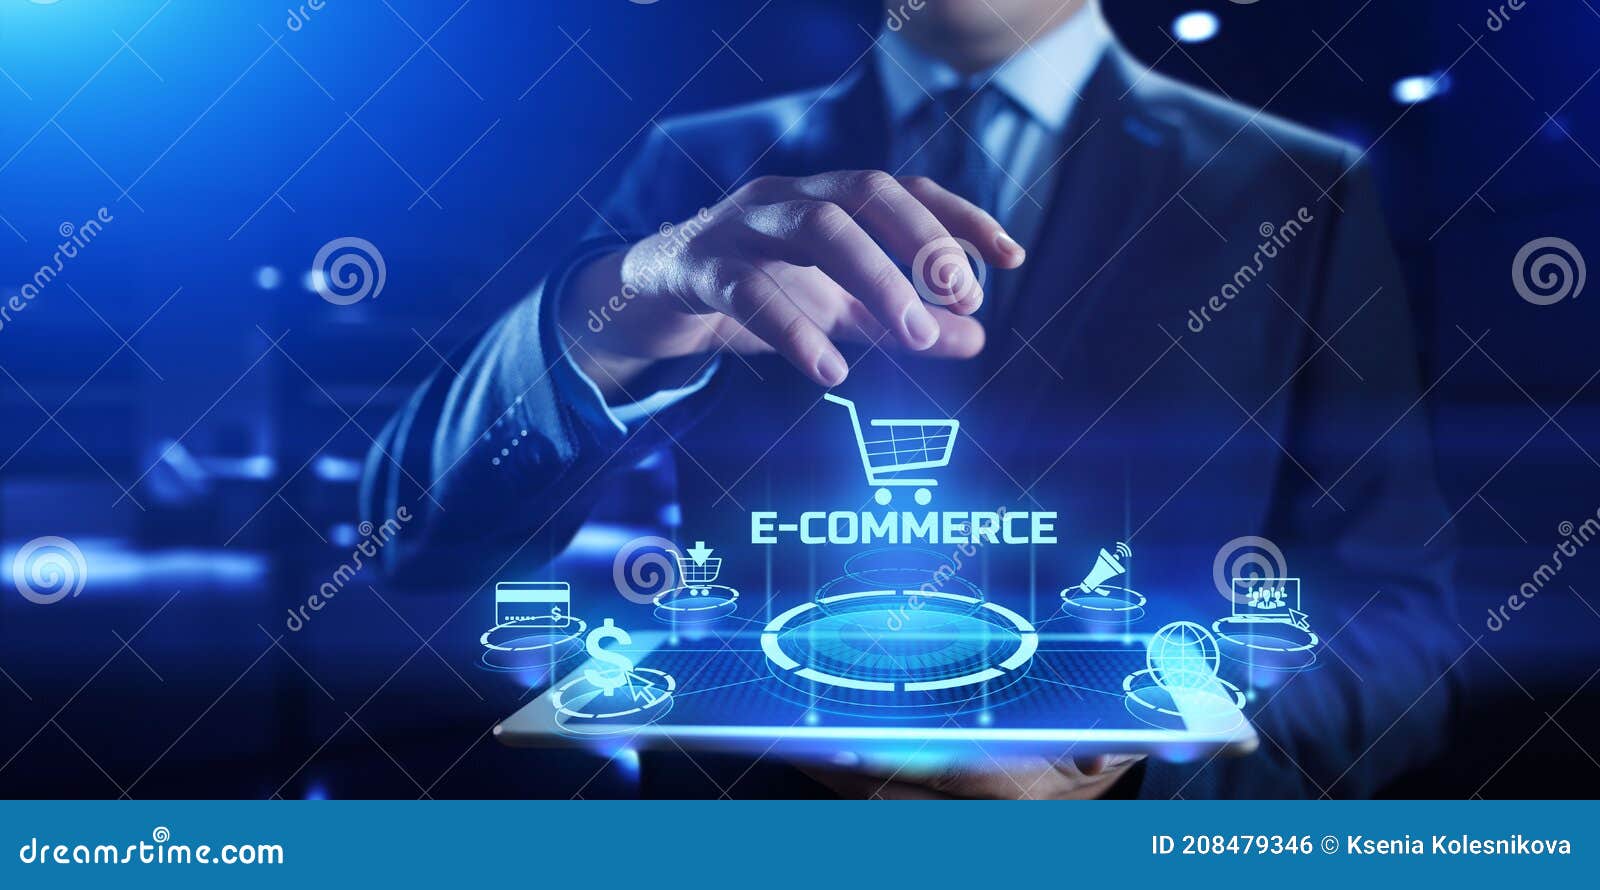 e-commerce online shopping business internet technology concept.